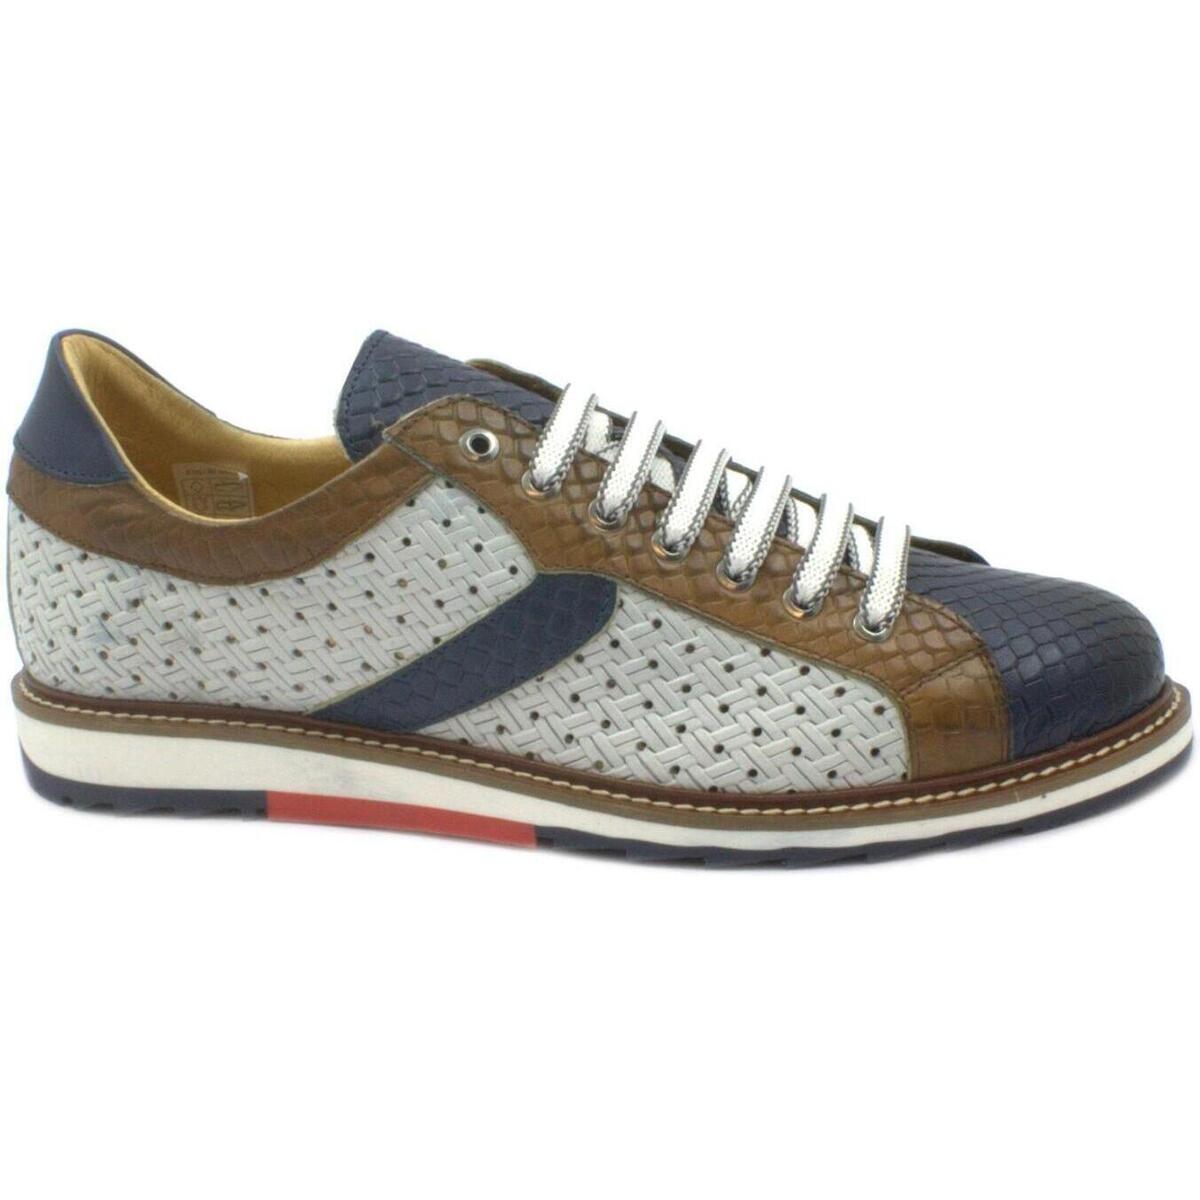 Schuhe Herren Derby-Schuhe Exton EXT-E23-8831-MA Blau